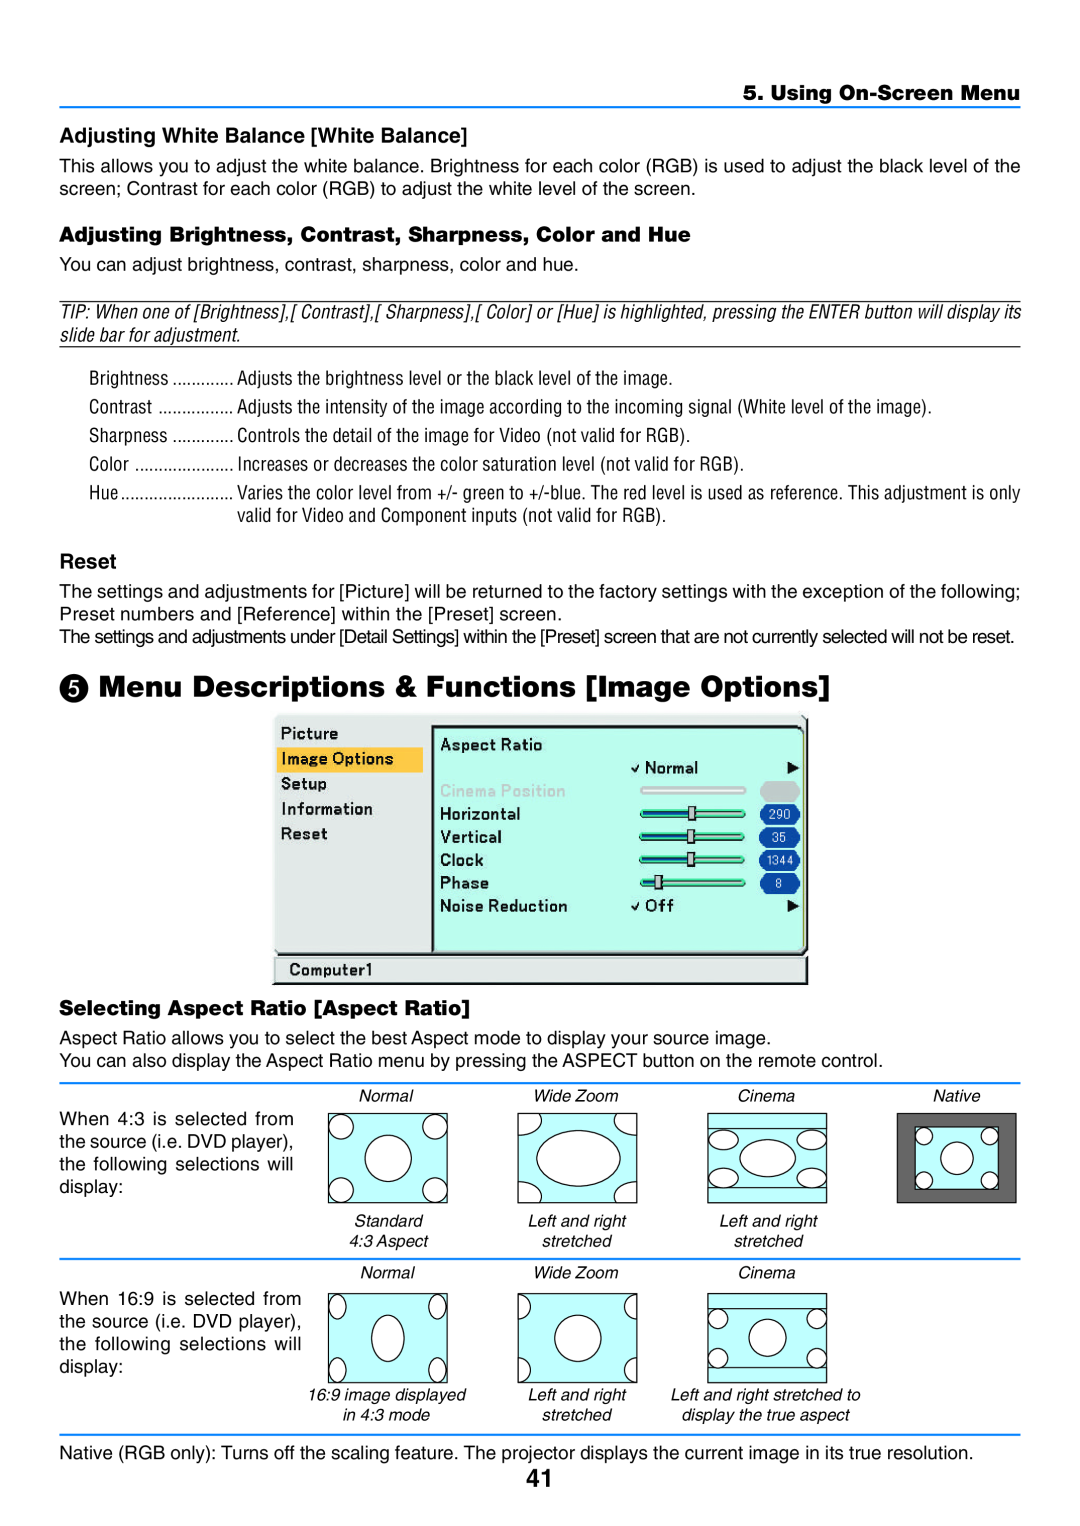 NEC VT58 Menu Descriptions & Functions Image Options, Adjusting White Balance White Balance, Reset, Using On-Screen Menu 